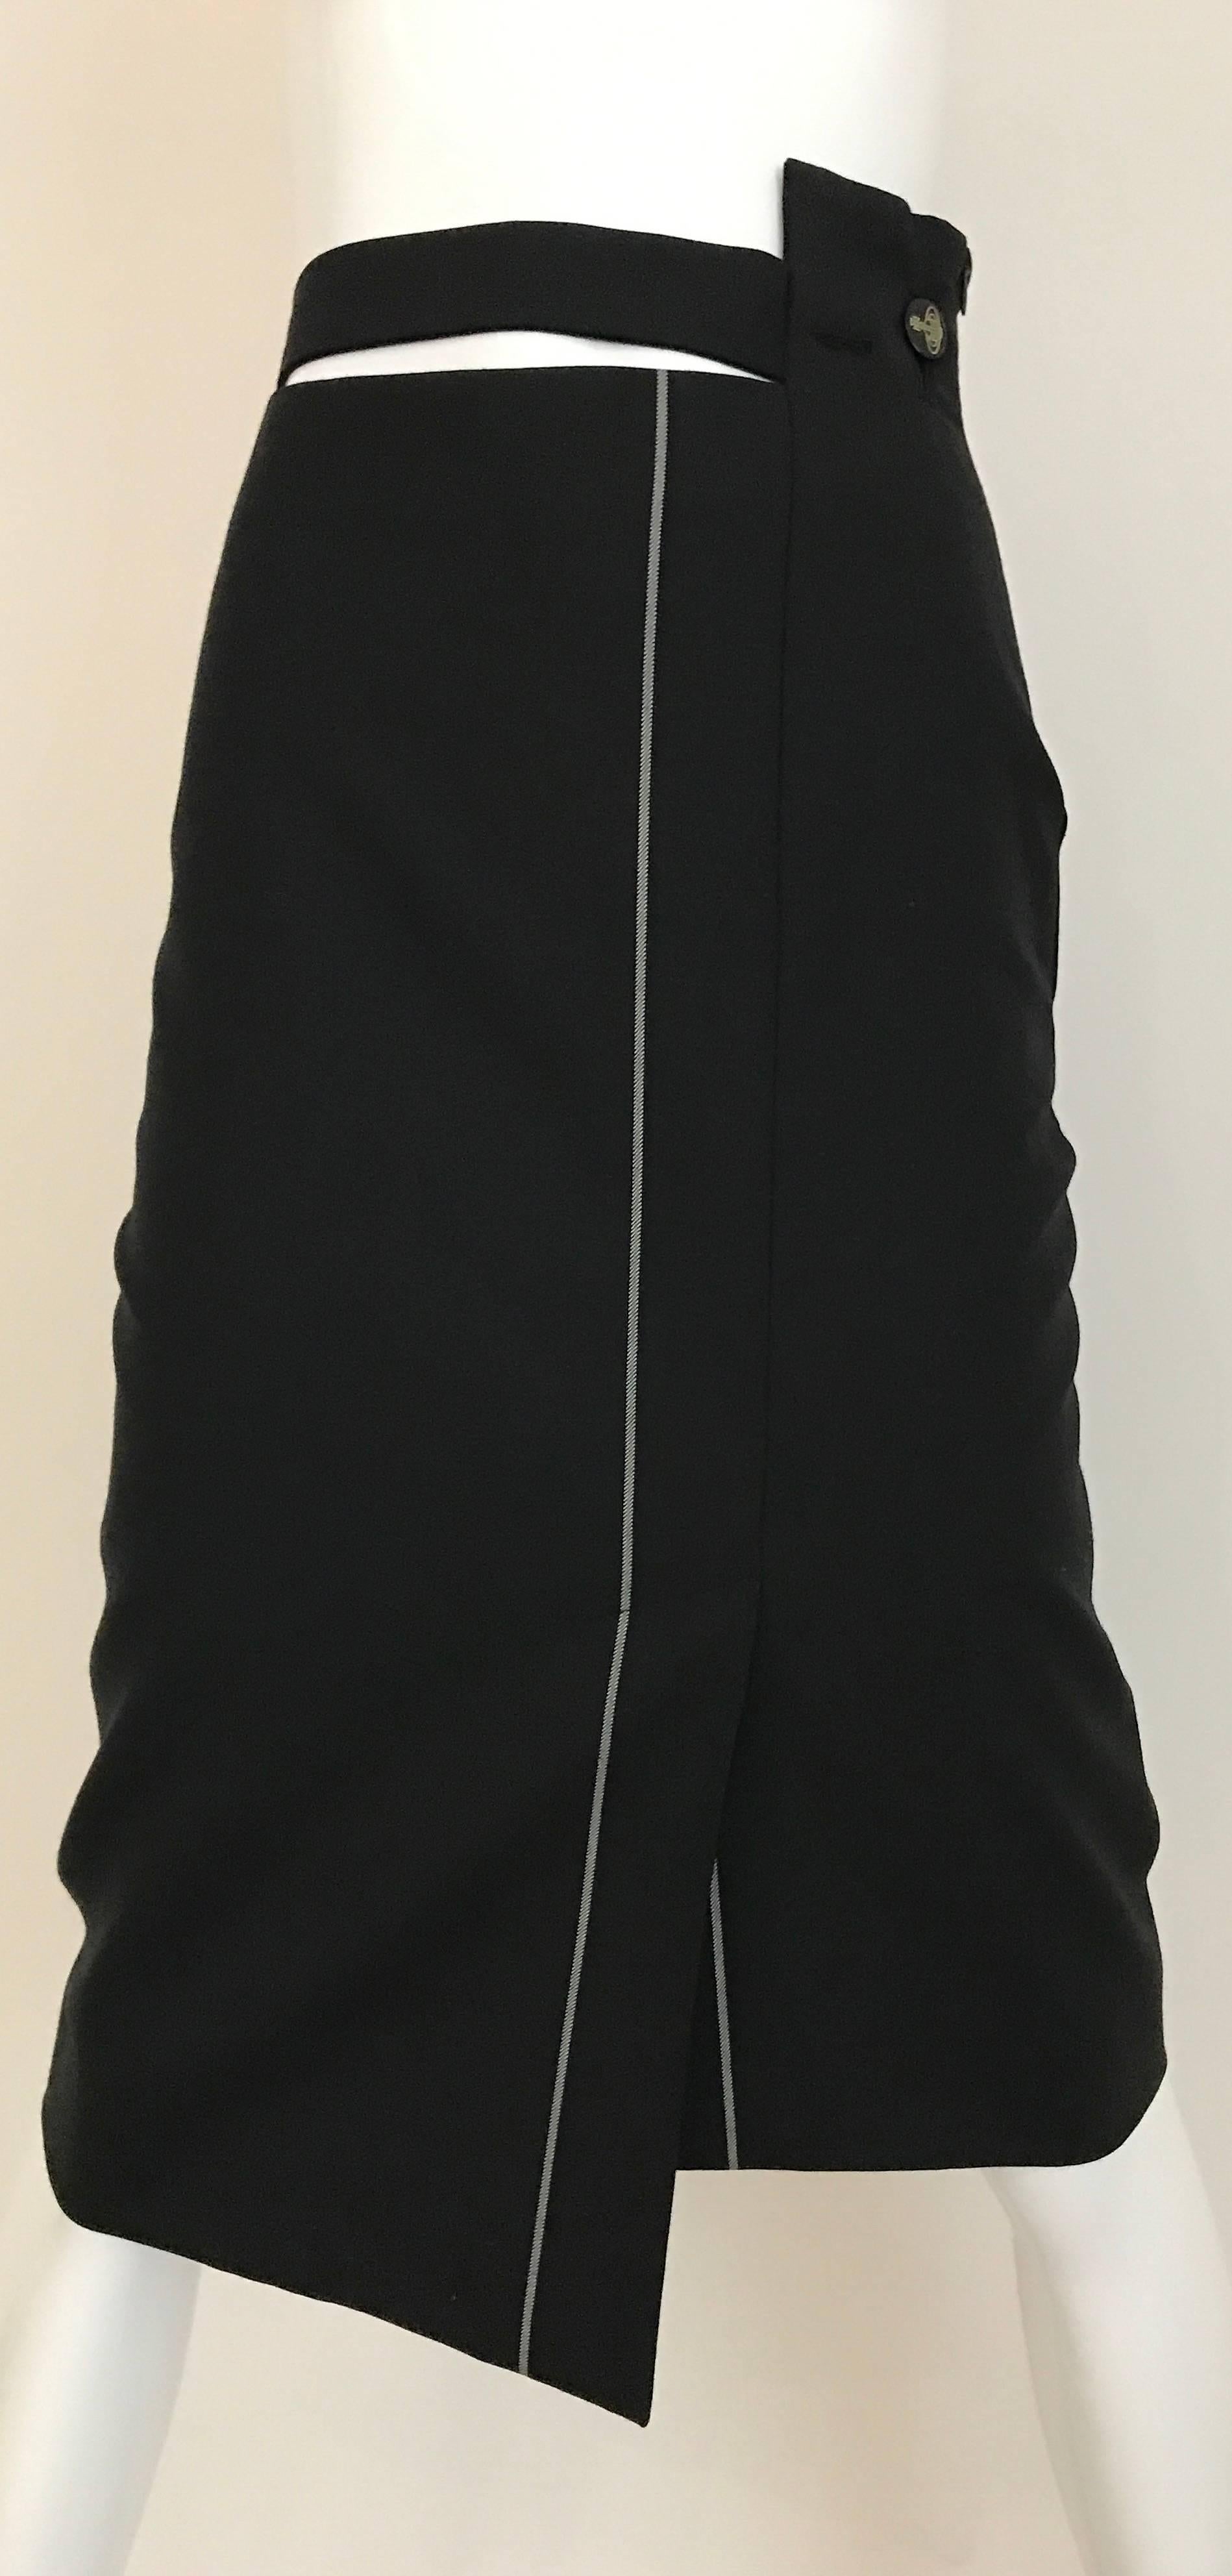 Vintage Viviene Westwood Black Wook with Grey Pin striped asymmetrical Skirt.
Waist 27 inch / Hip 36 inch